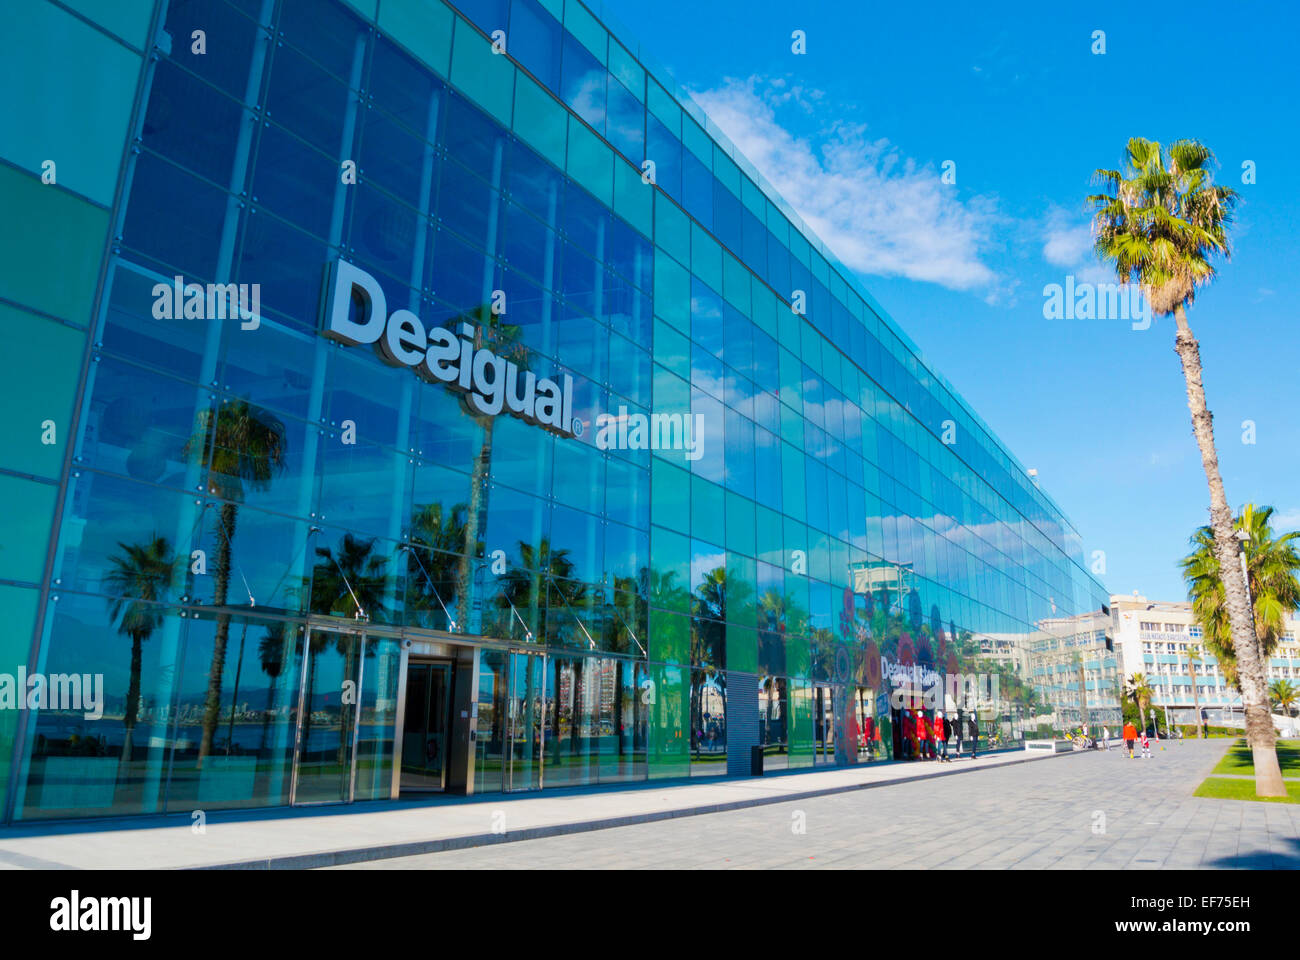 Desigual fashion shop, Barceloneta, refurbished port area, Barcelona, Spain  Stock Photo - Alamy